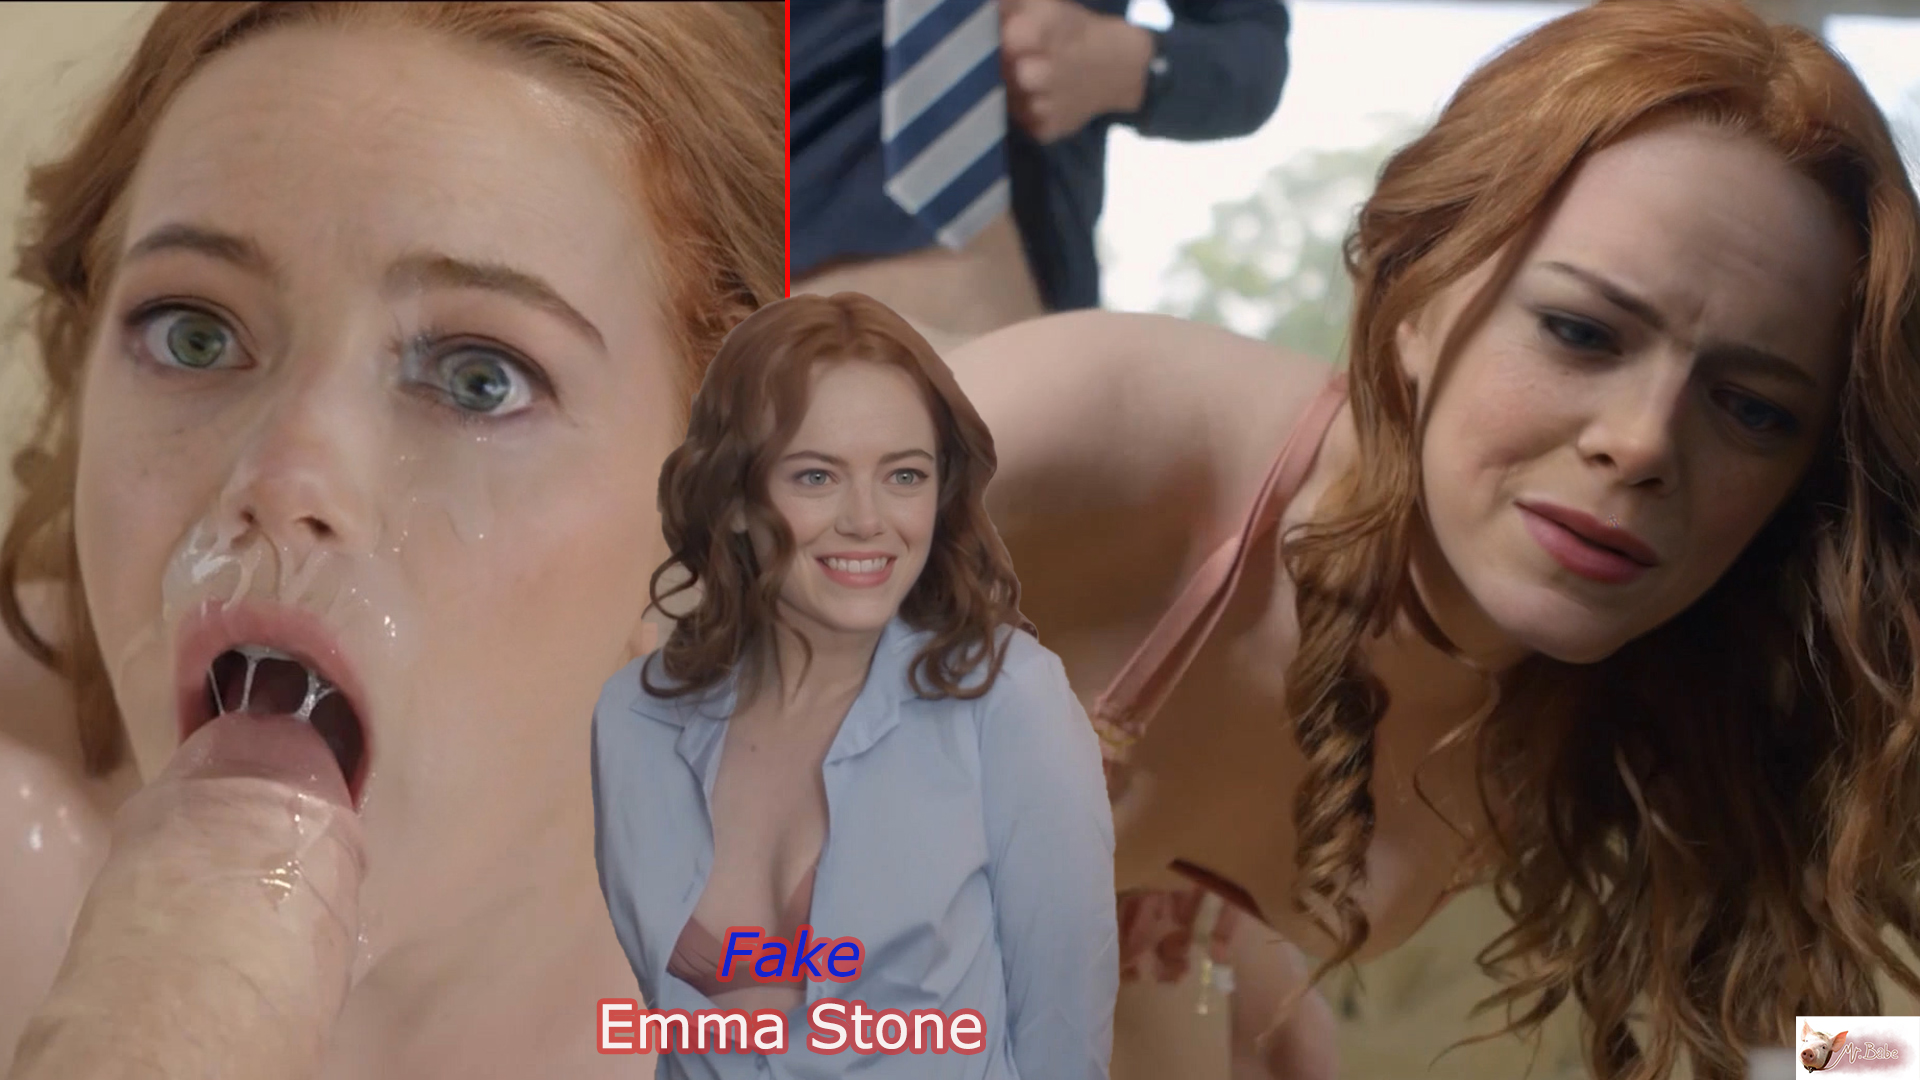 Xxxxxx Hd Download - Fake Emma Stone - (trailer) -12- /XXX Parody / Free Download DeepFake Porn  - MrDeepFakes